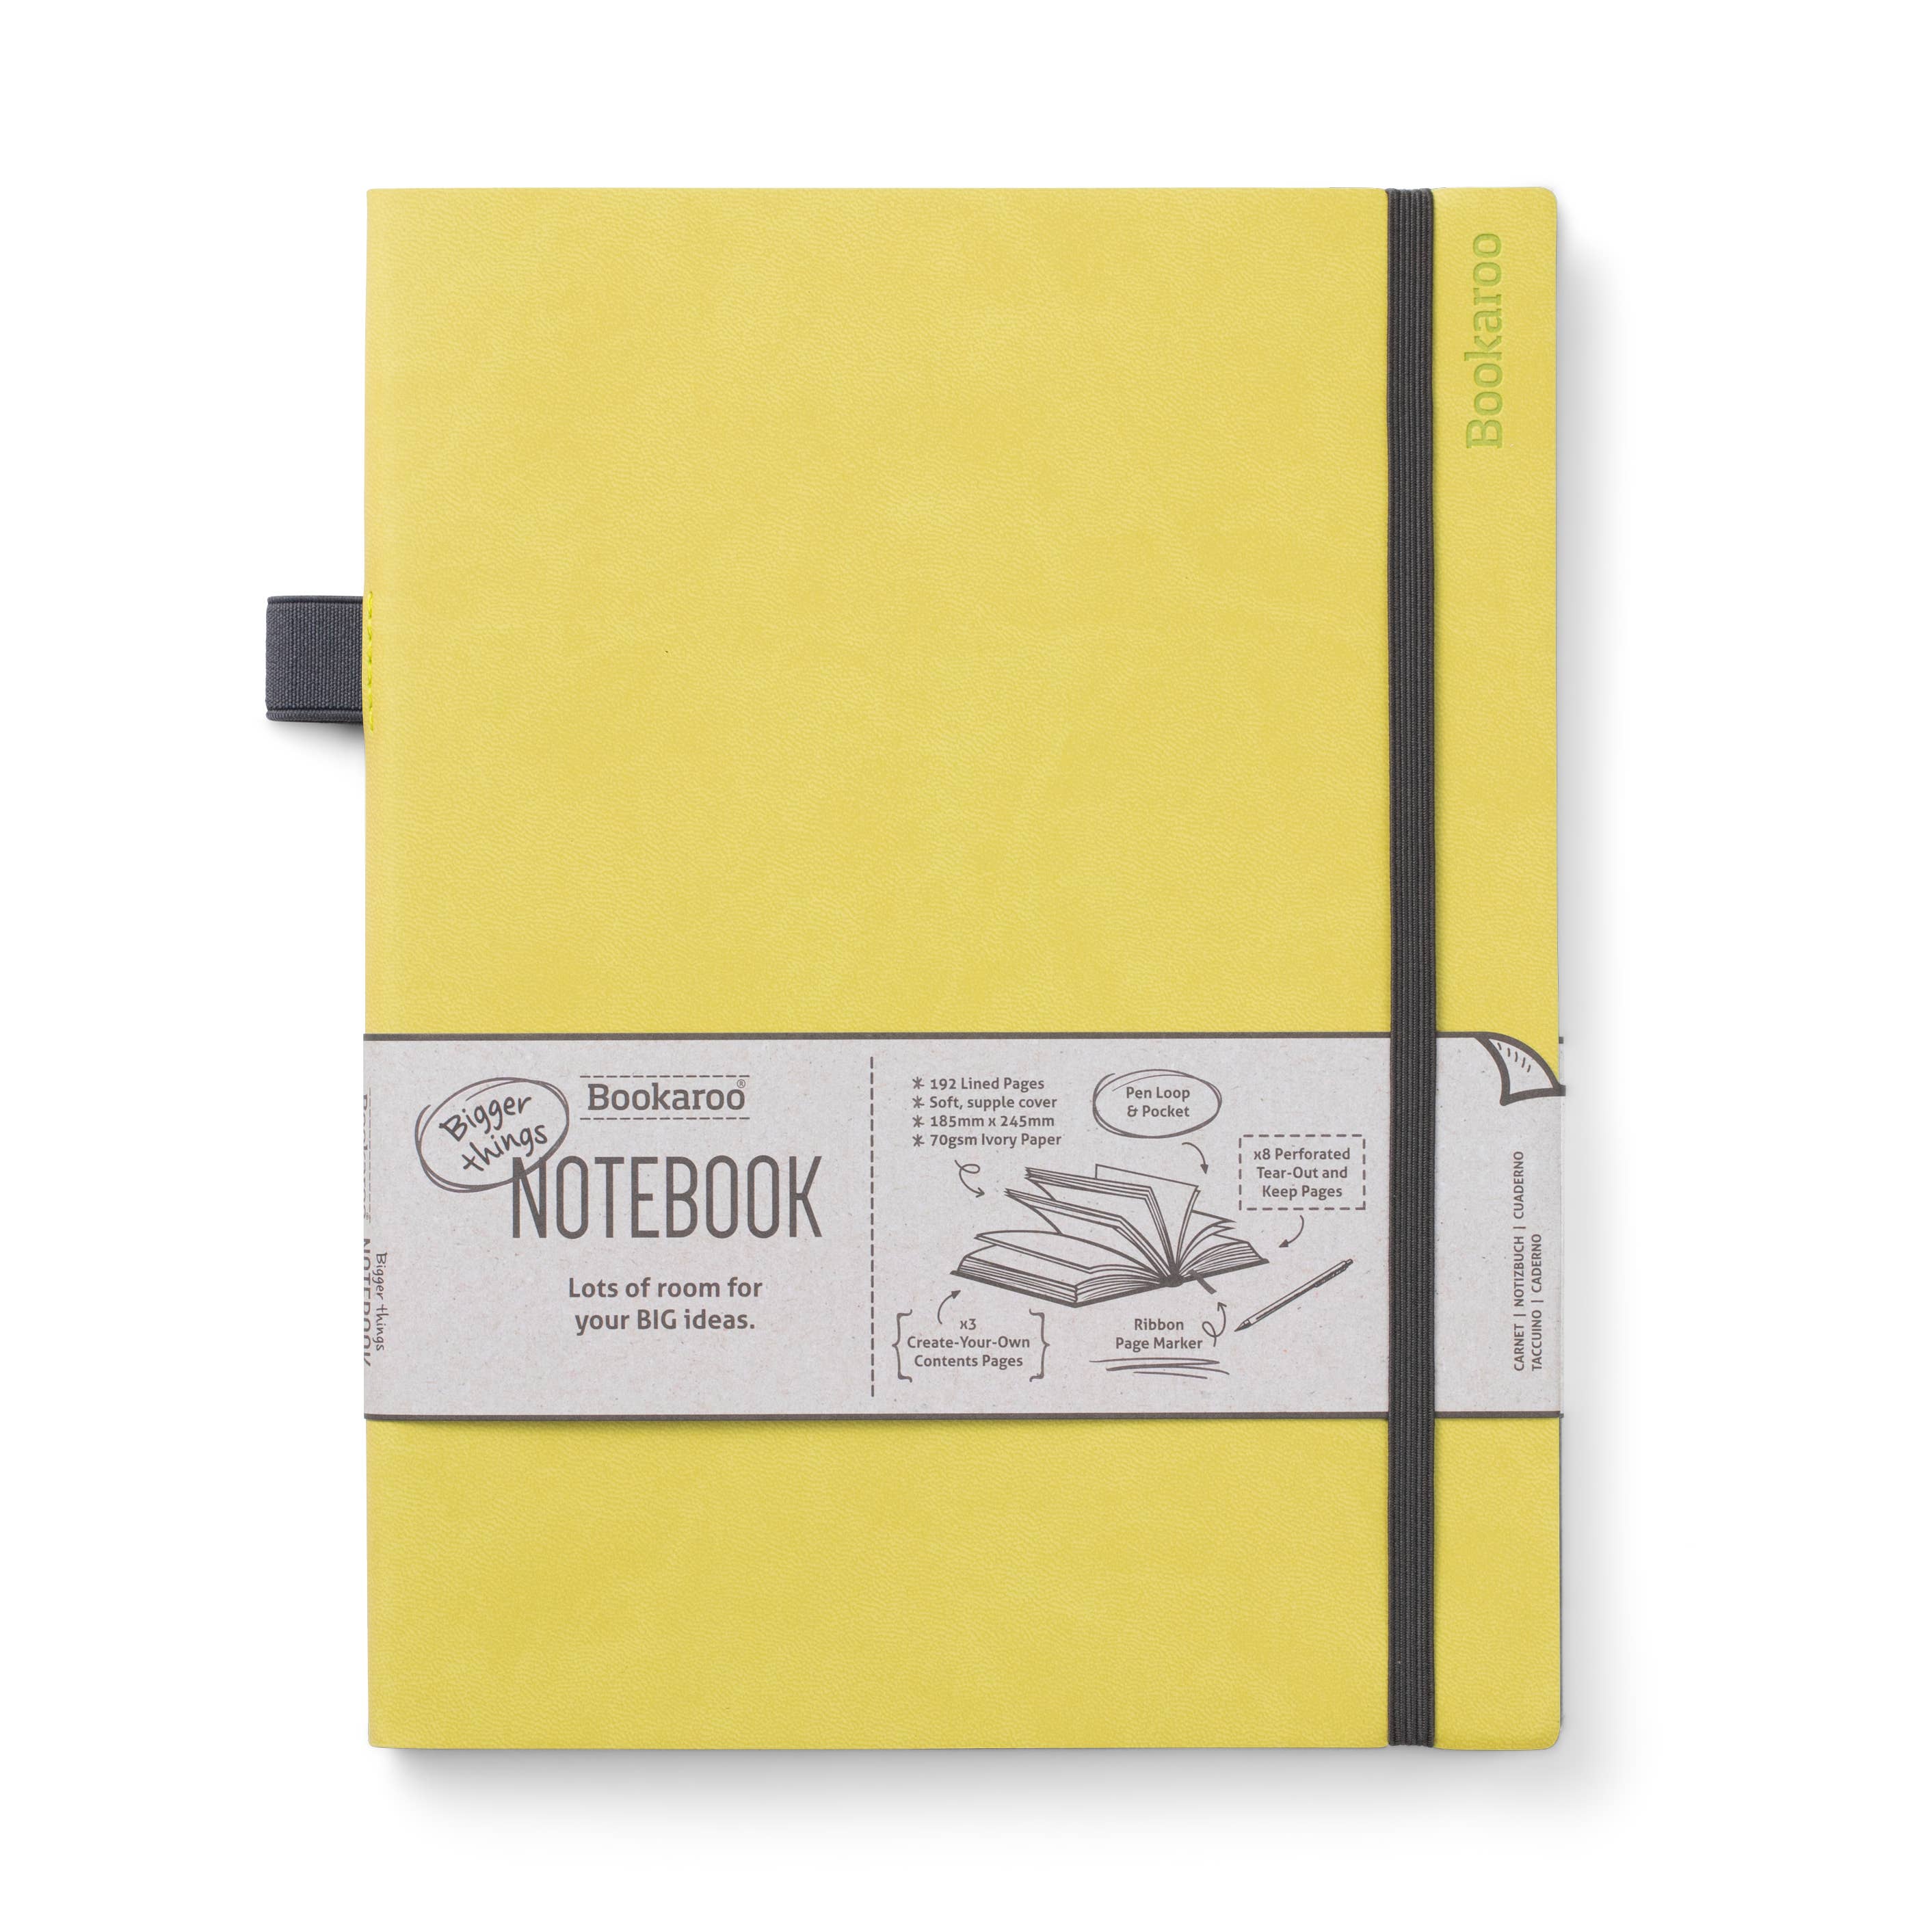 Bookaroo Bigger Things Notebook: Blush